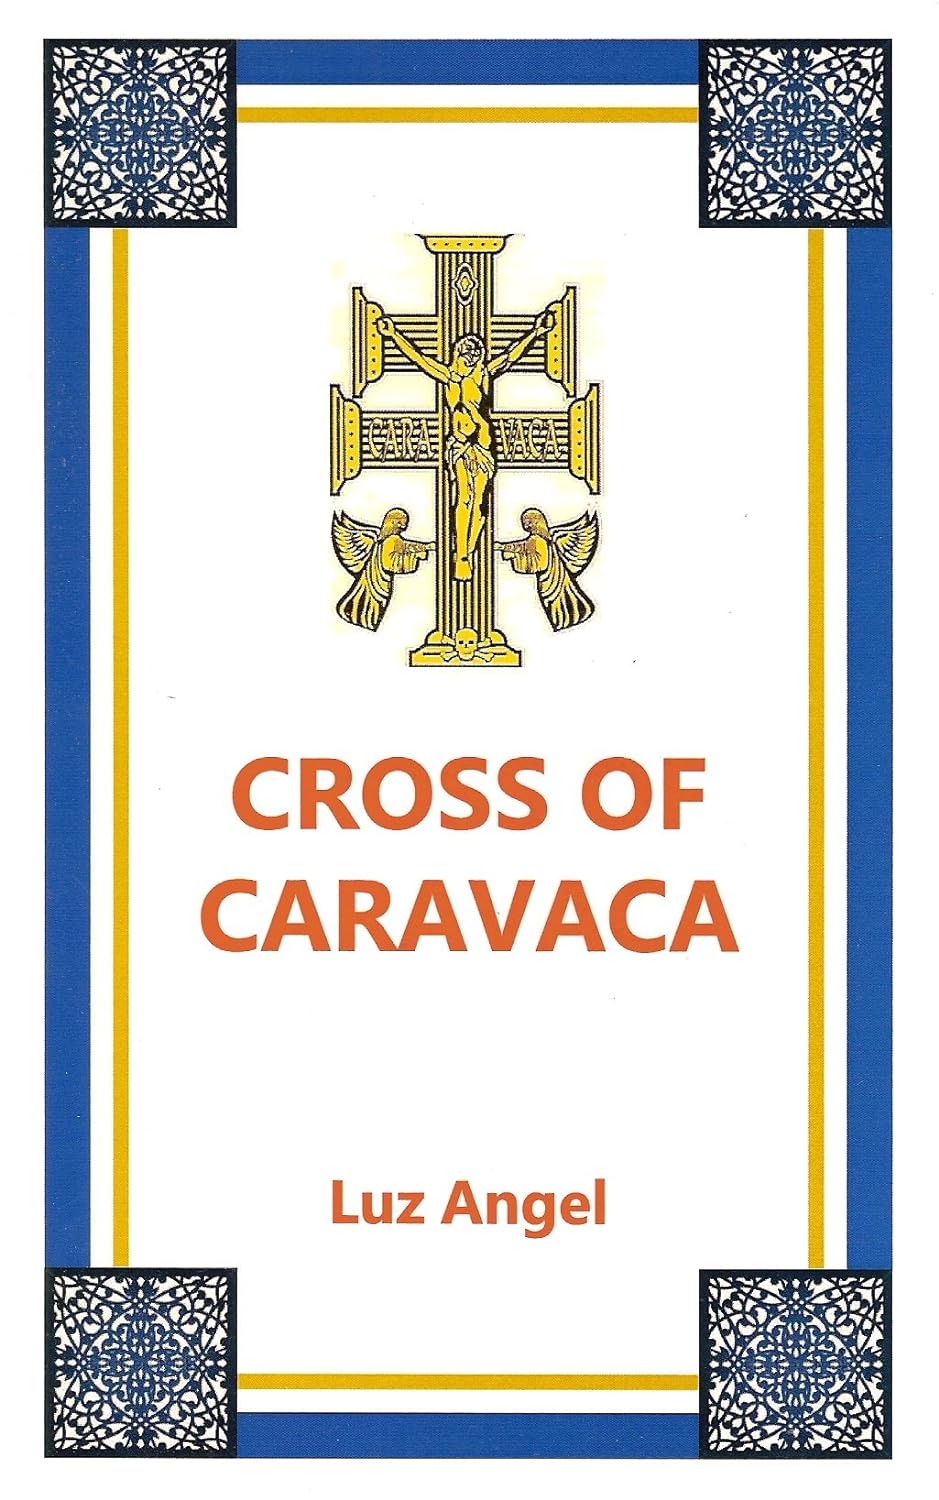 Cross of Caravaca by Luiz Angel